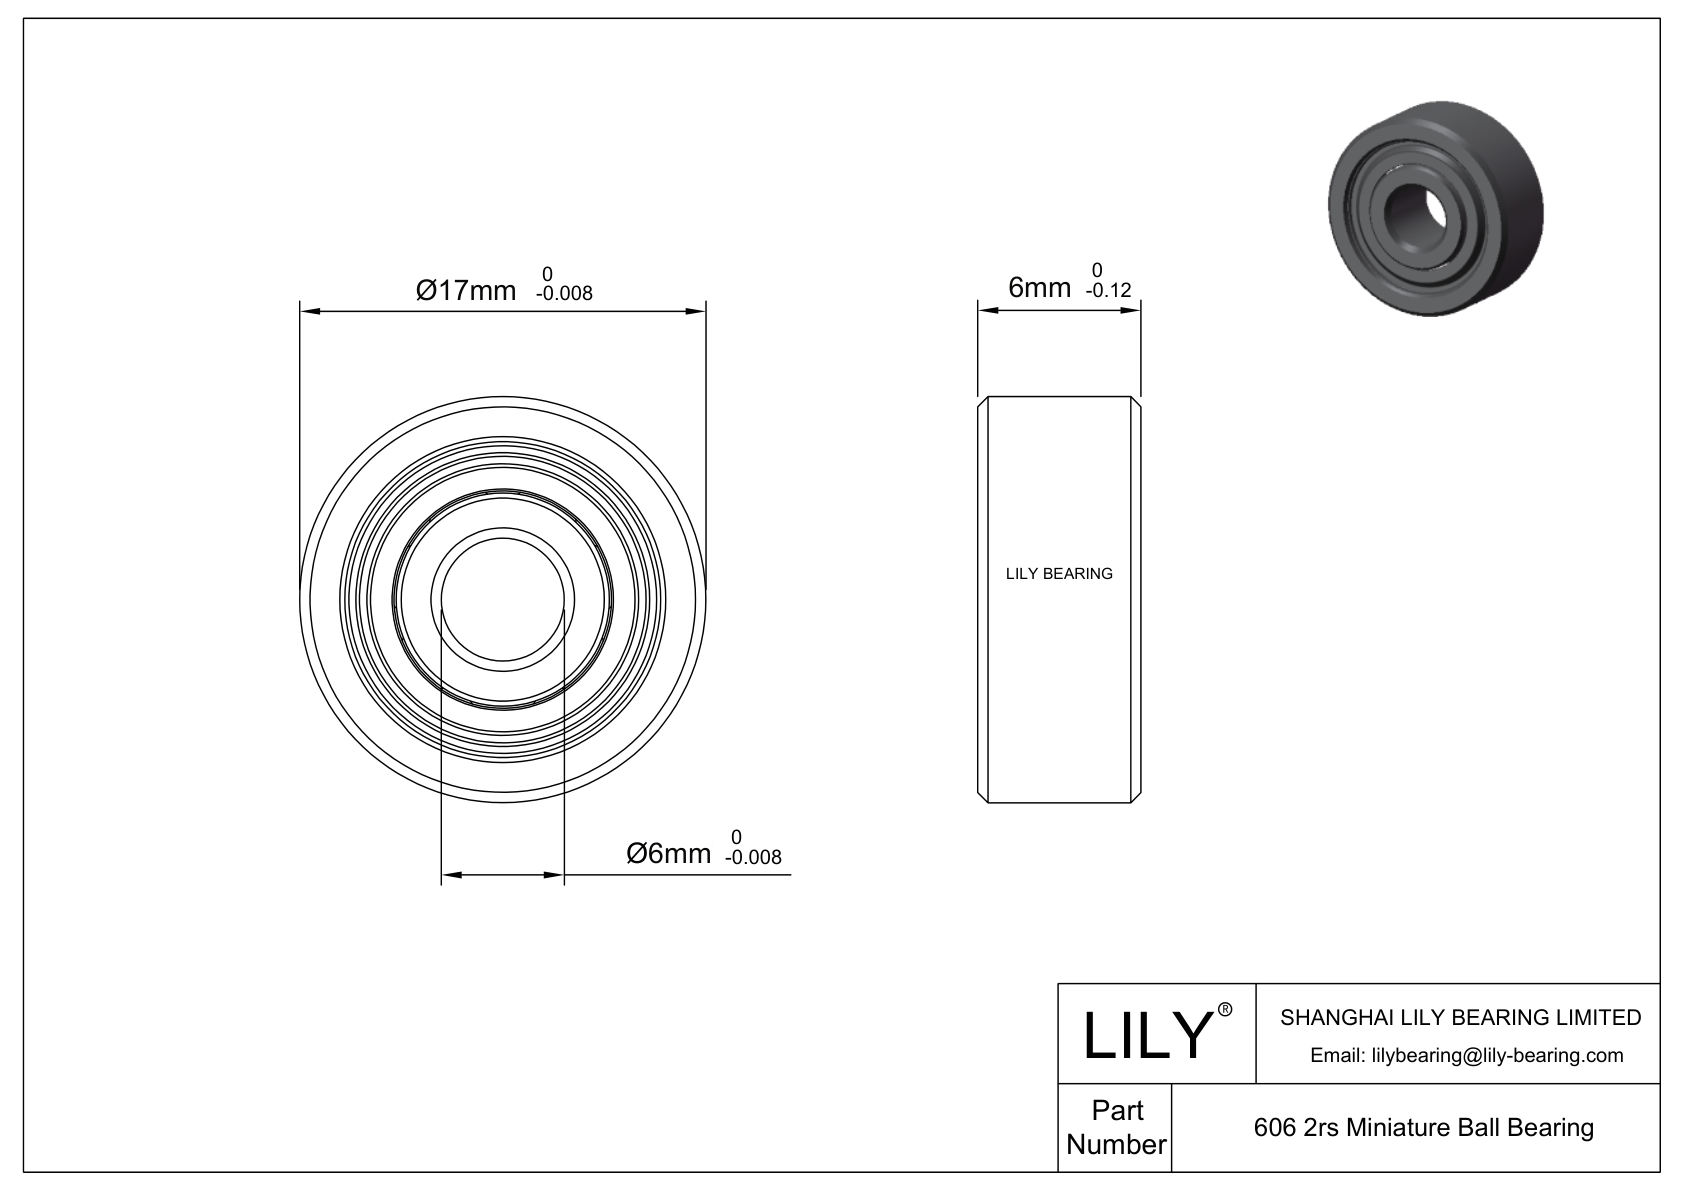 LILY-PU60621-9 Polyurethane Coated Bearing cad drawing